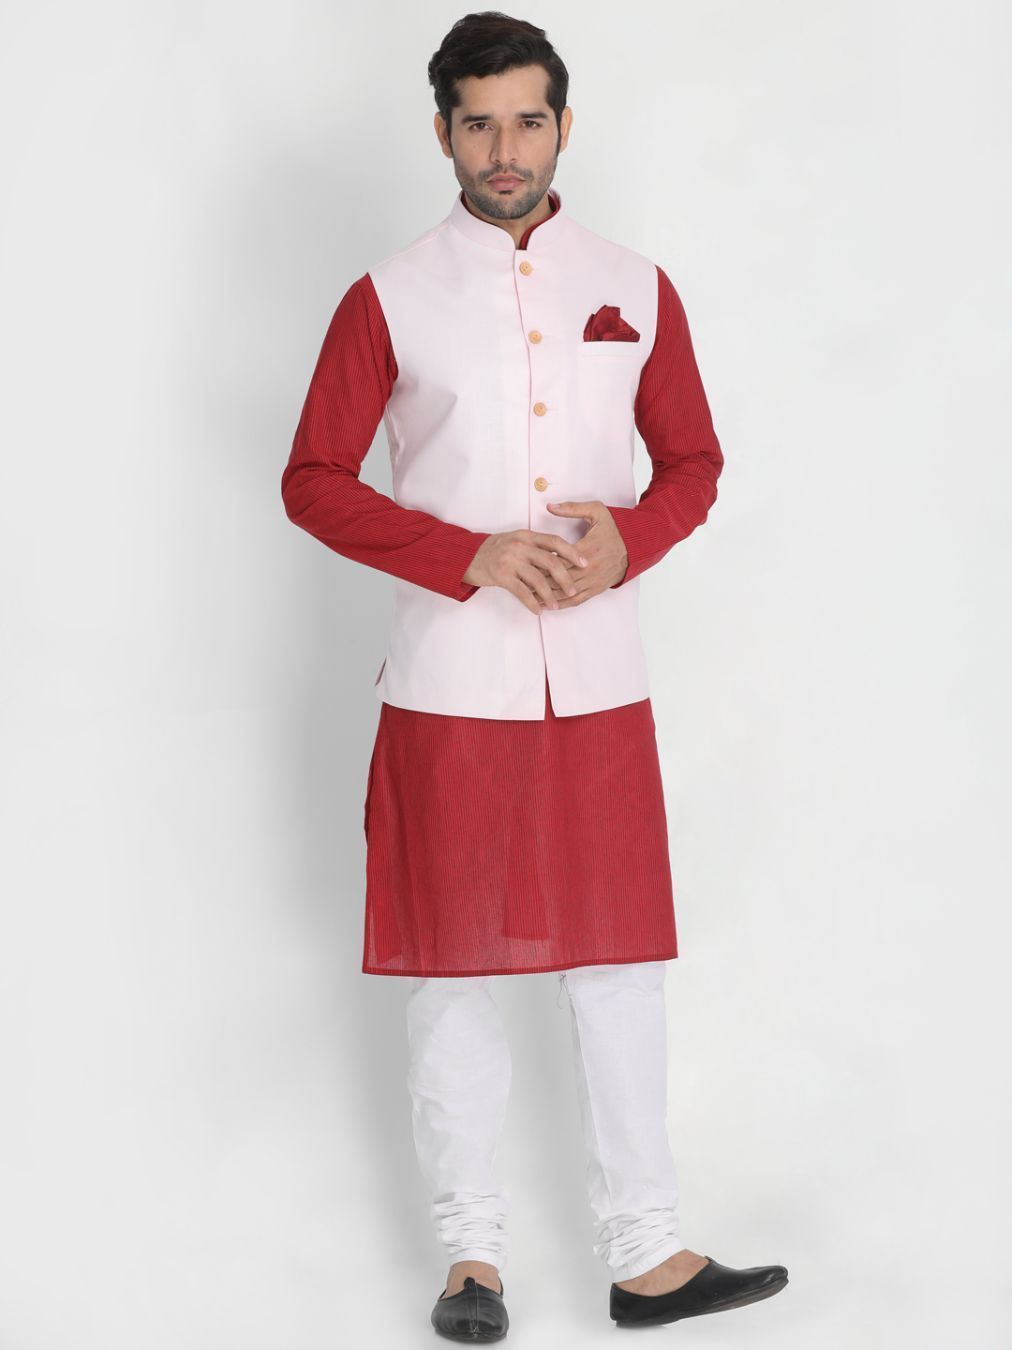 Men's Red Cotton Blend Kurta, Ethnic Jacket and Pyjama Set